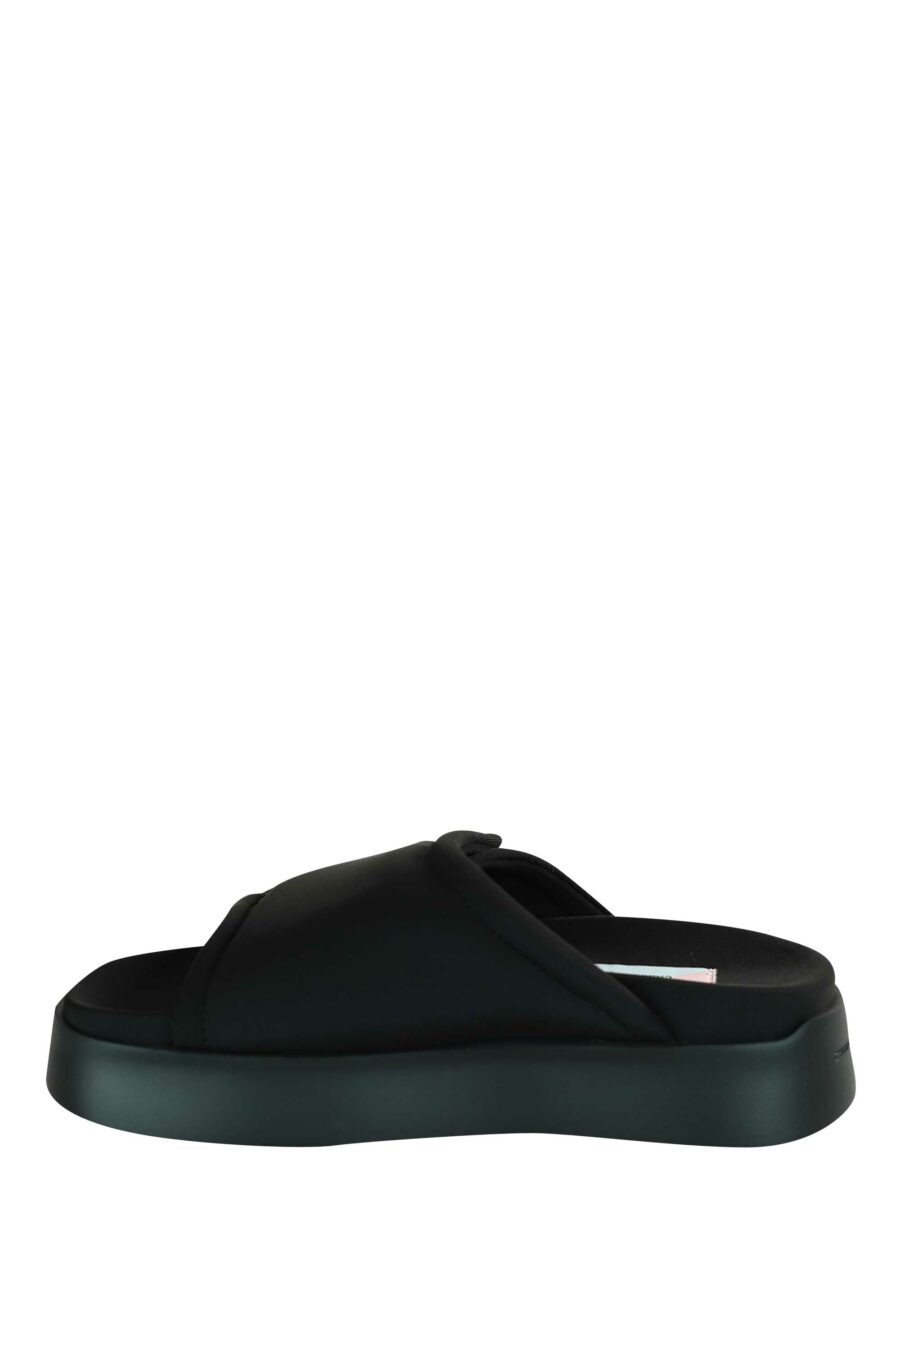 Black sandals with velcro and black platform - 8059482630771 3